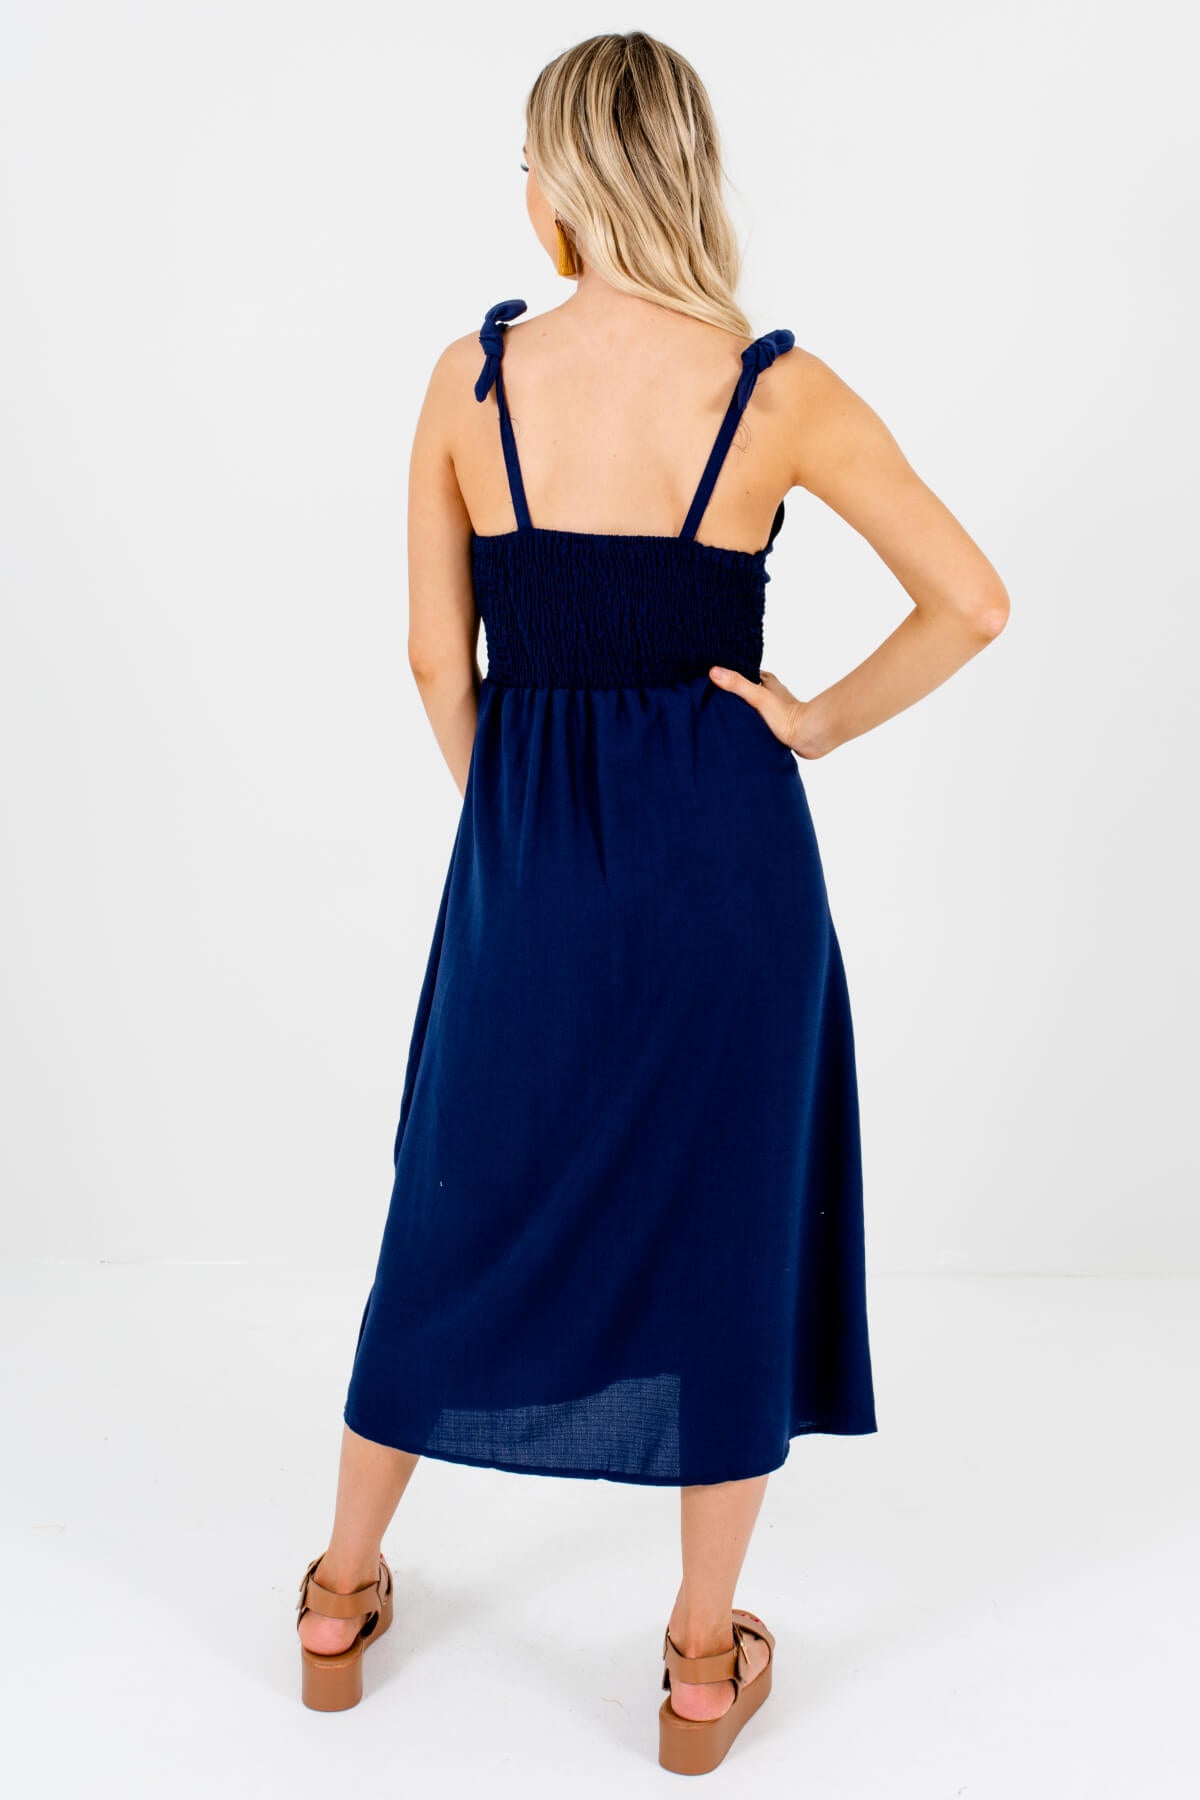 Women's Navy Blue Self-Tie Strap Boutique Midi Dresses